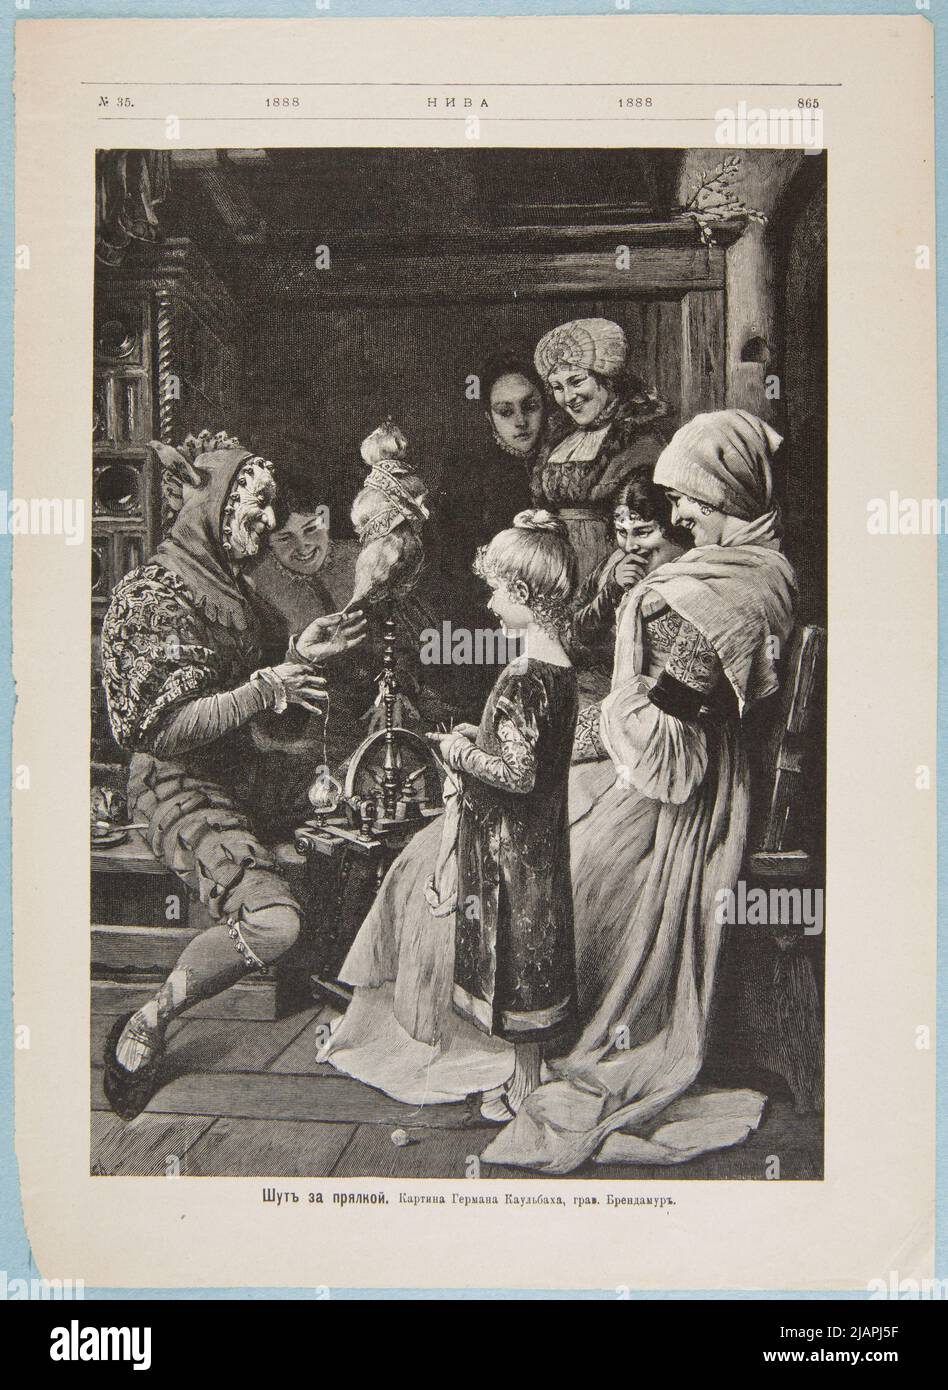 Il jester alla bobina secondo l'immagine di Hermann Kaulbach. Sluing per Niwy 1888, No. 35, p. 865 Brend'amour, Franz Robert Richard (1831 1915), Kaulbach, Hermann von (1846 1909) Foto Stock